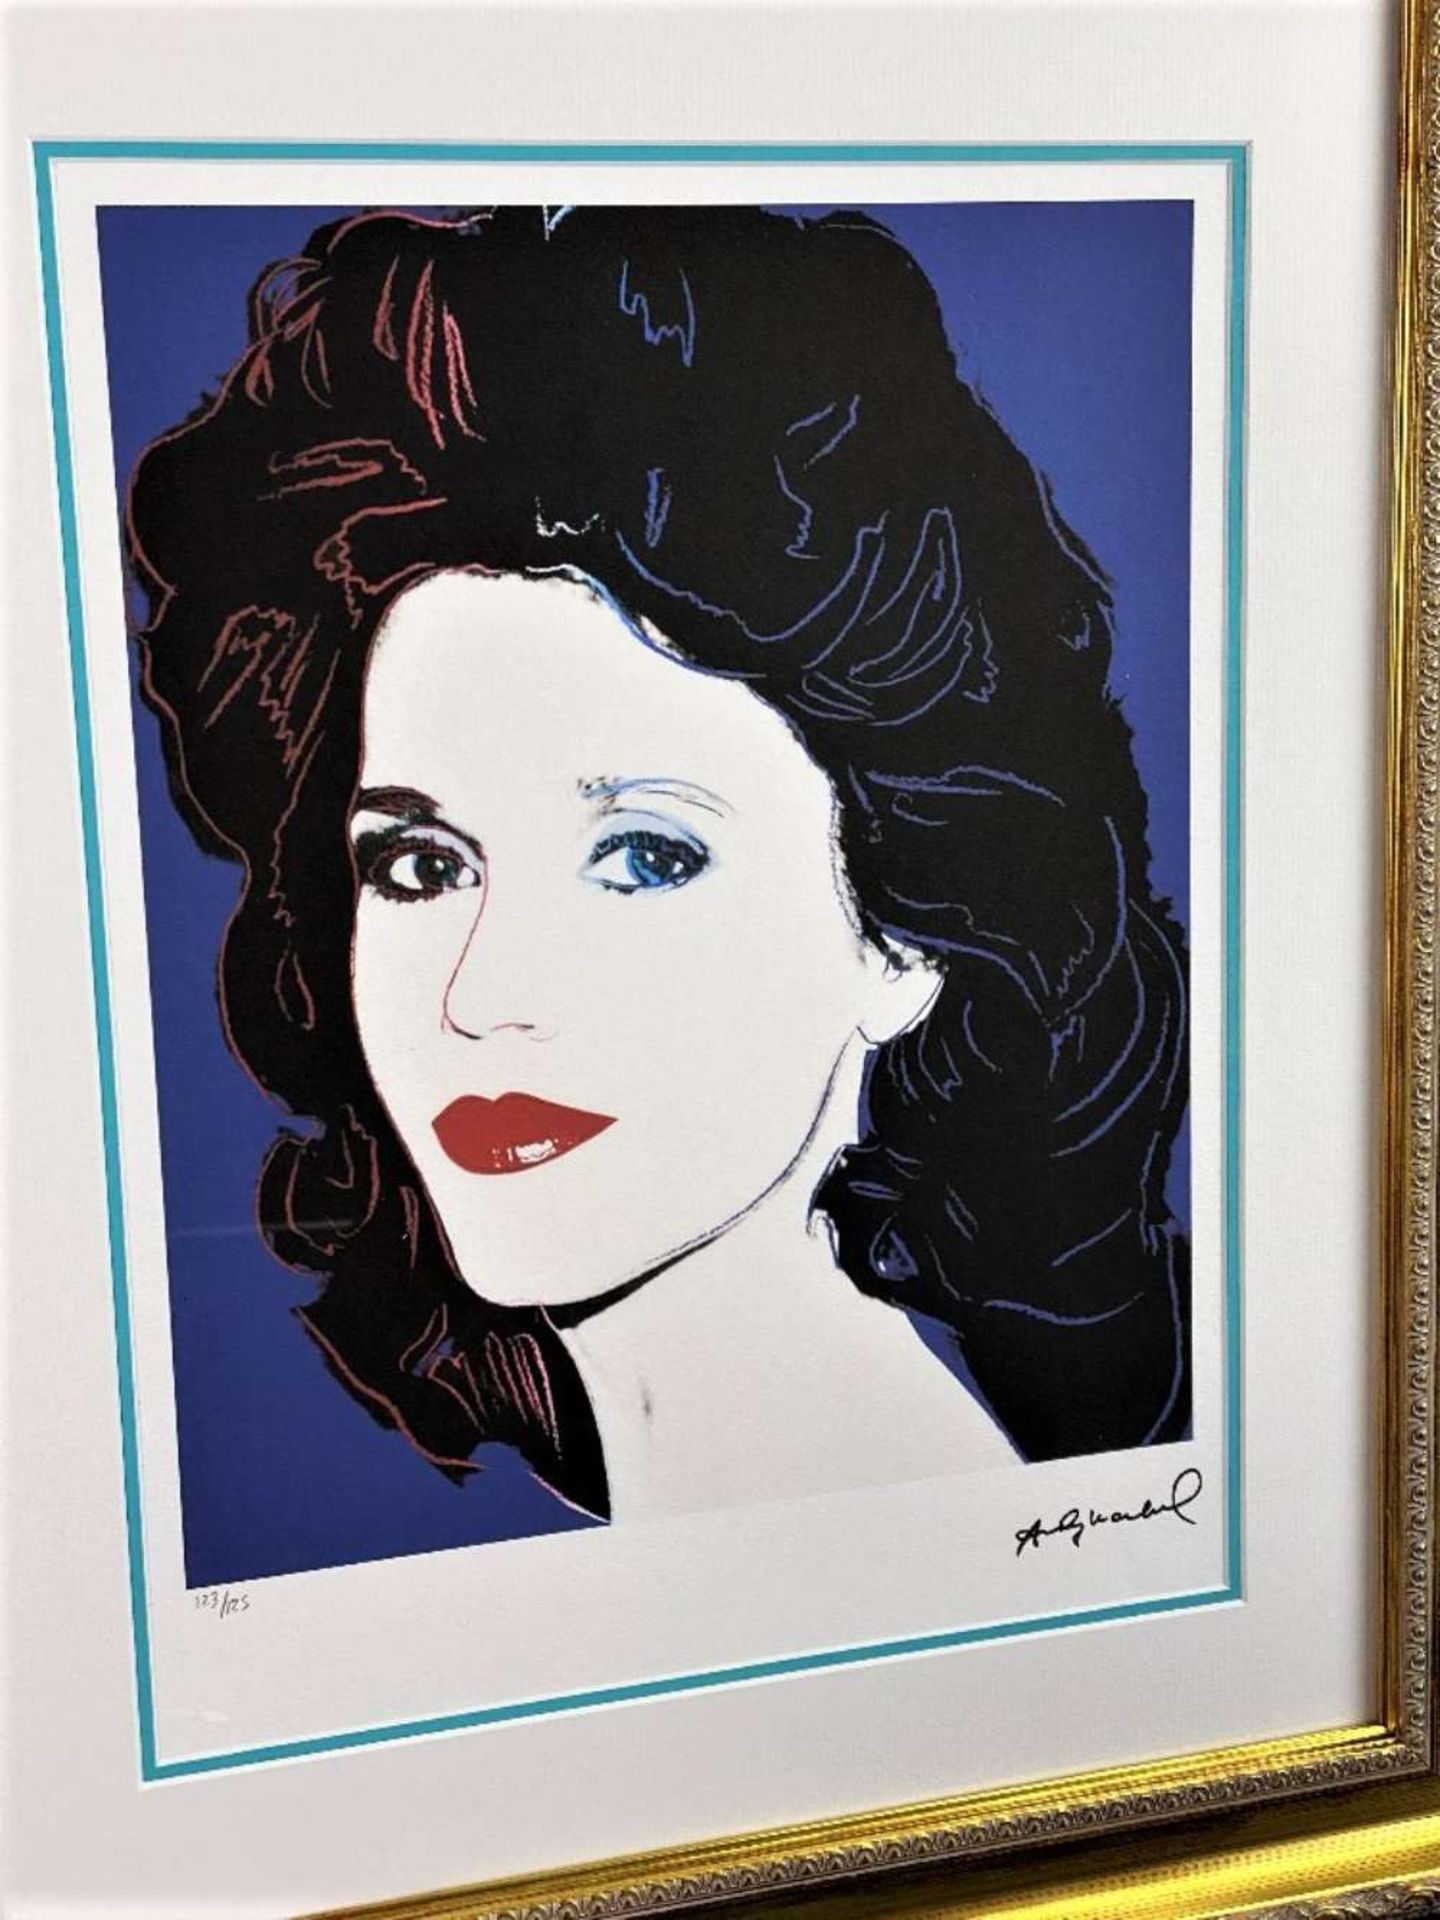 Andy Warhol (1928-1987) “Jane Fonda” Ltd Edition Lithograph - Image 2 of 6